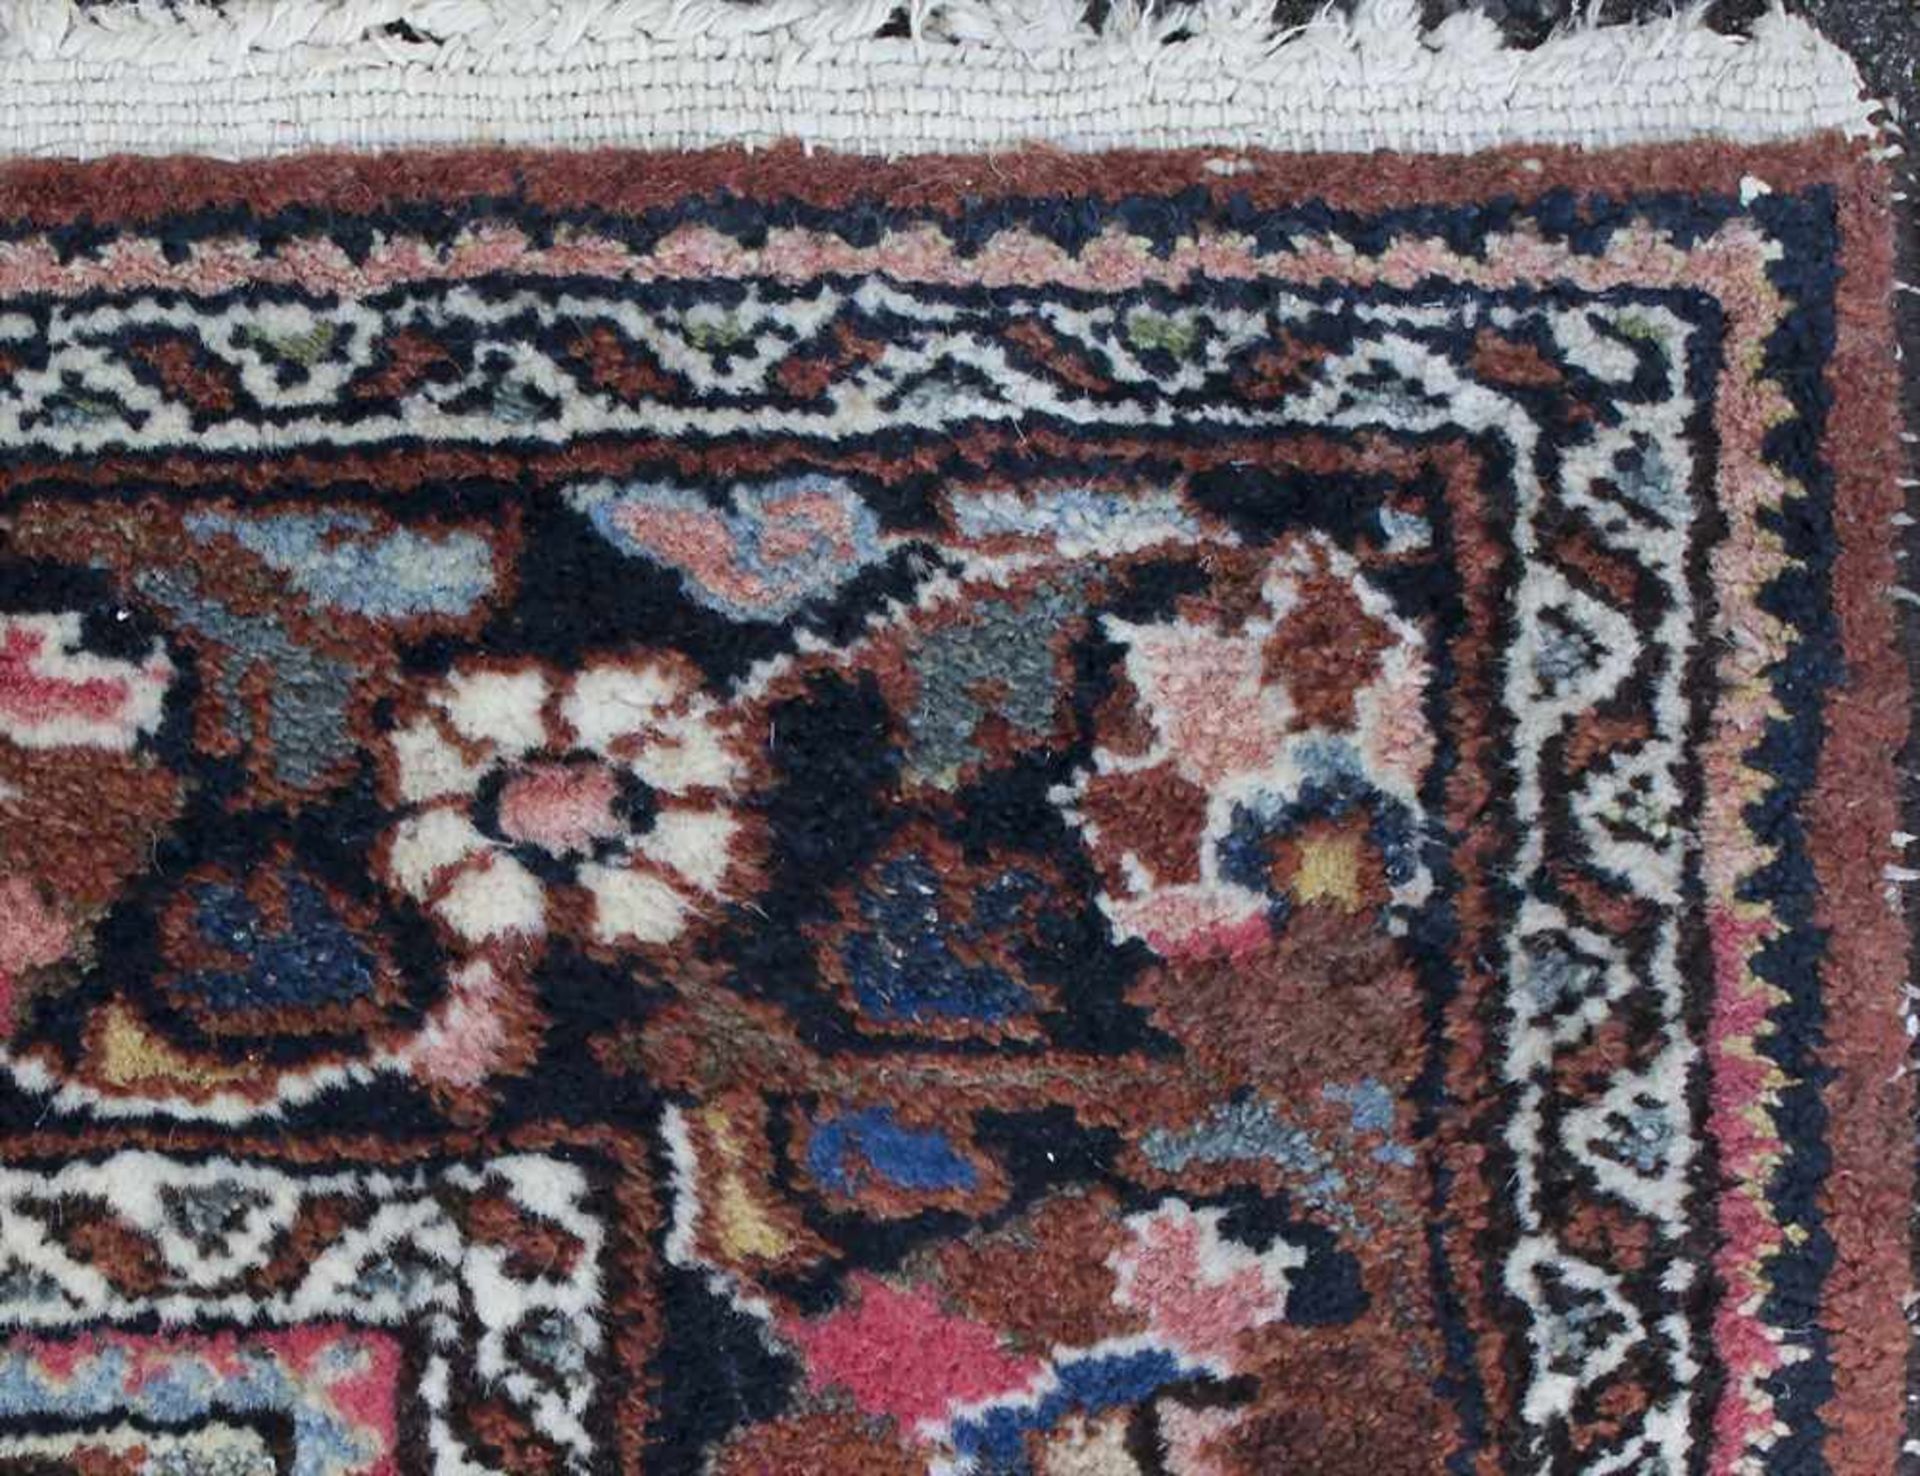 Orientteppich / An oriental carpetMaterial: Wolle auf Wolle, Maße: 160 x 102 cm, Zustand: gut, - Image 2 of 5